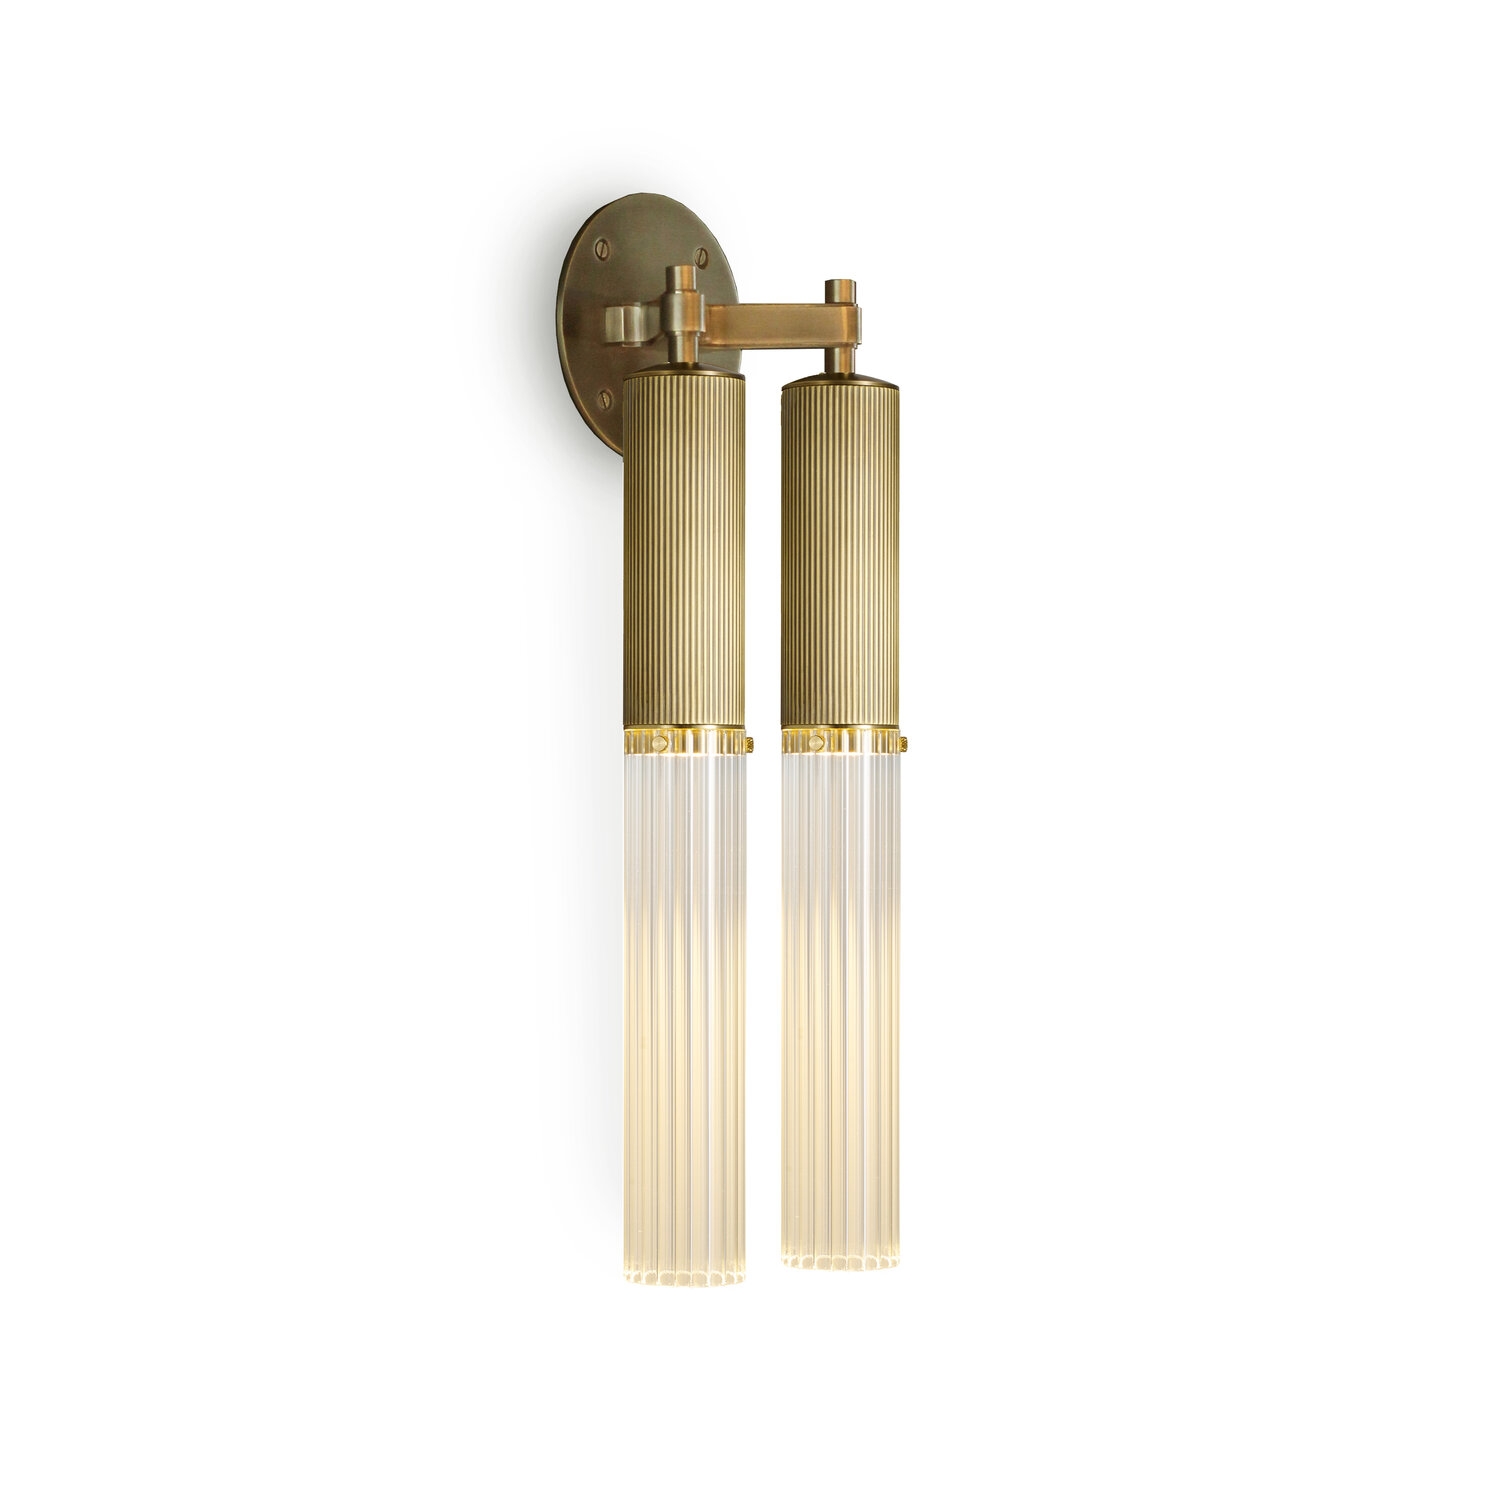 J Adams & Co – Flume Double Wall Light Fixture – LED – Brass Colour – Brass Material